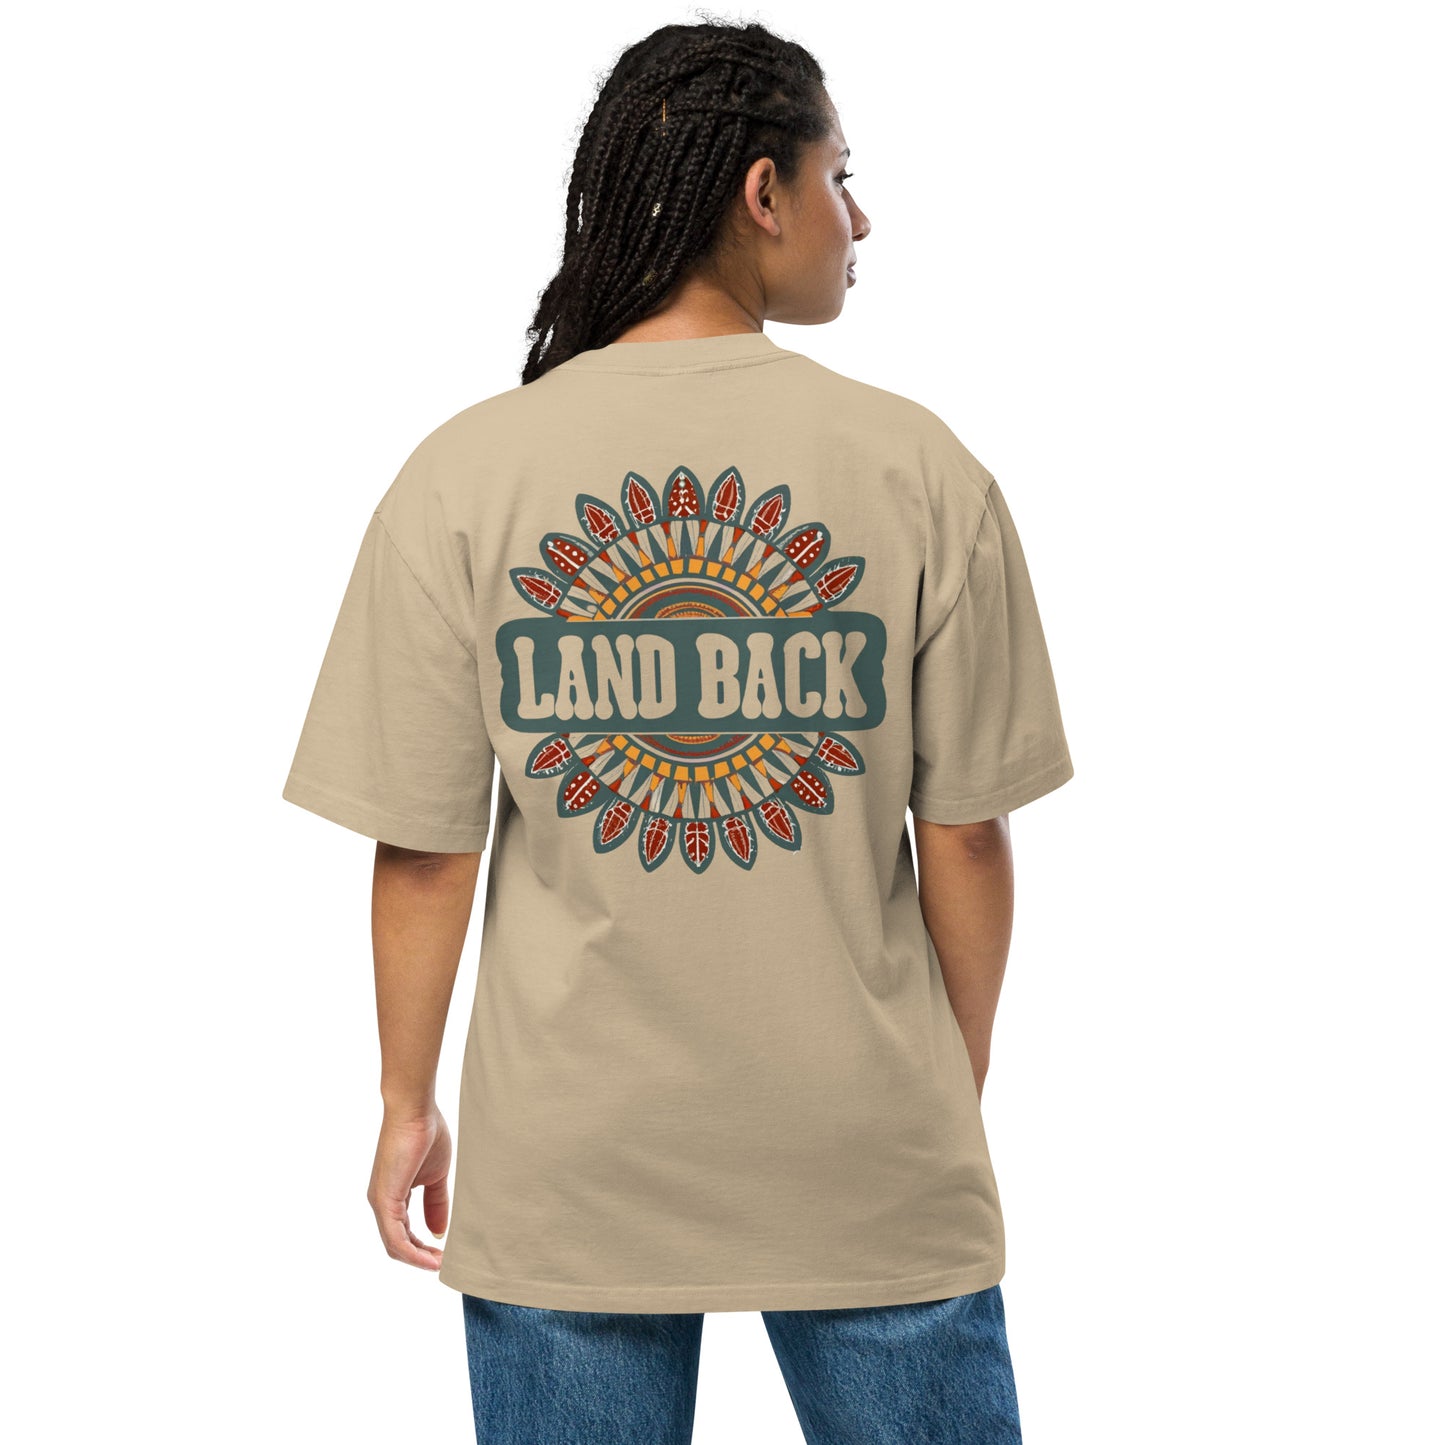 Land back-Arrowheads- Oversized faded t-shirt